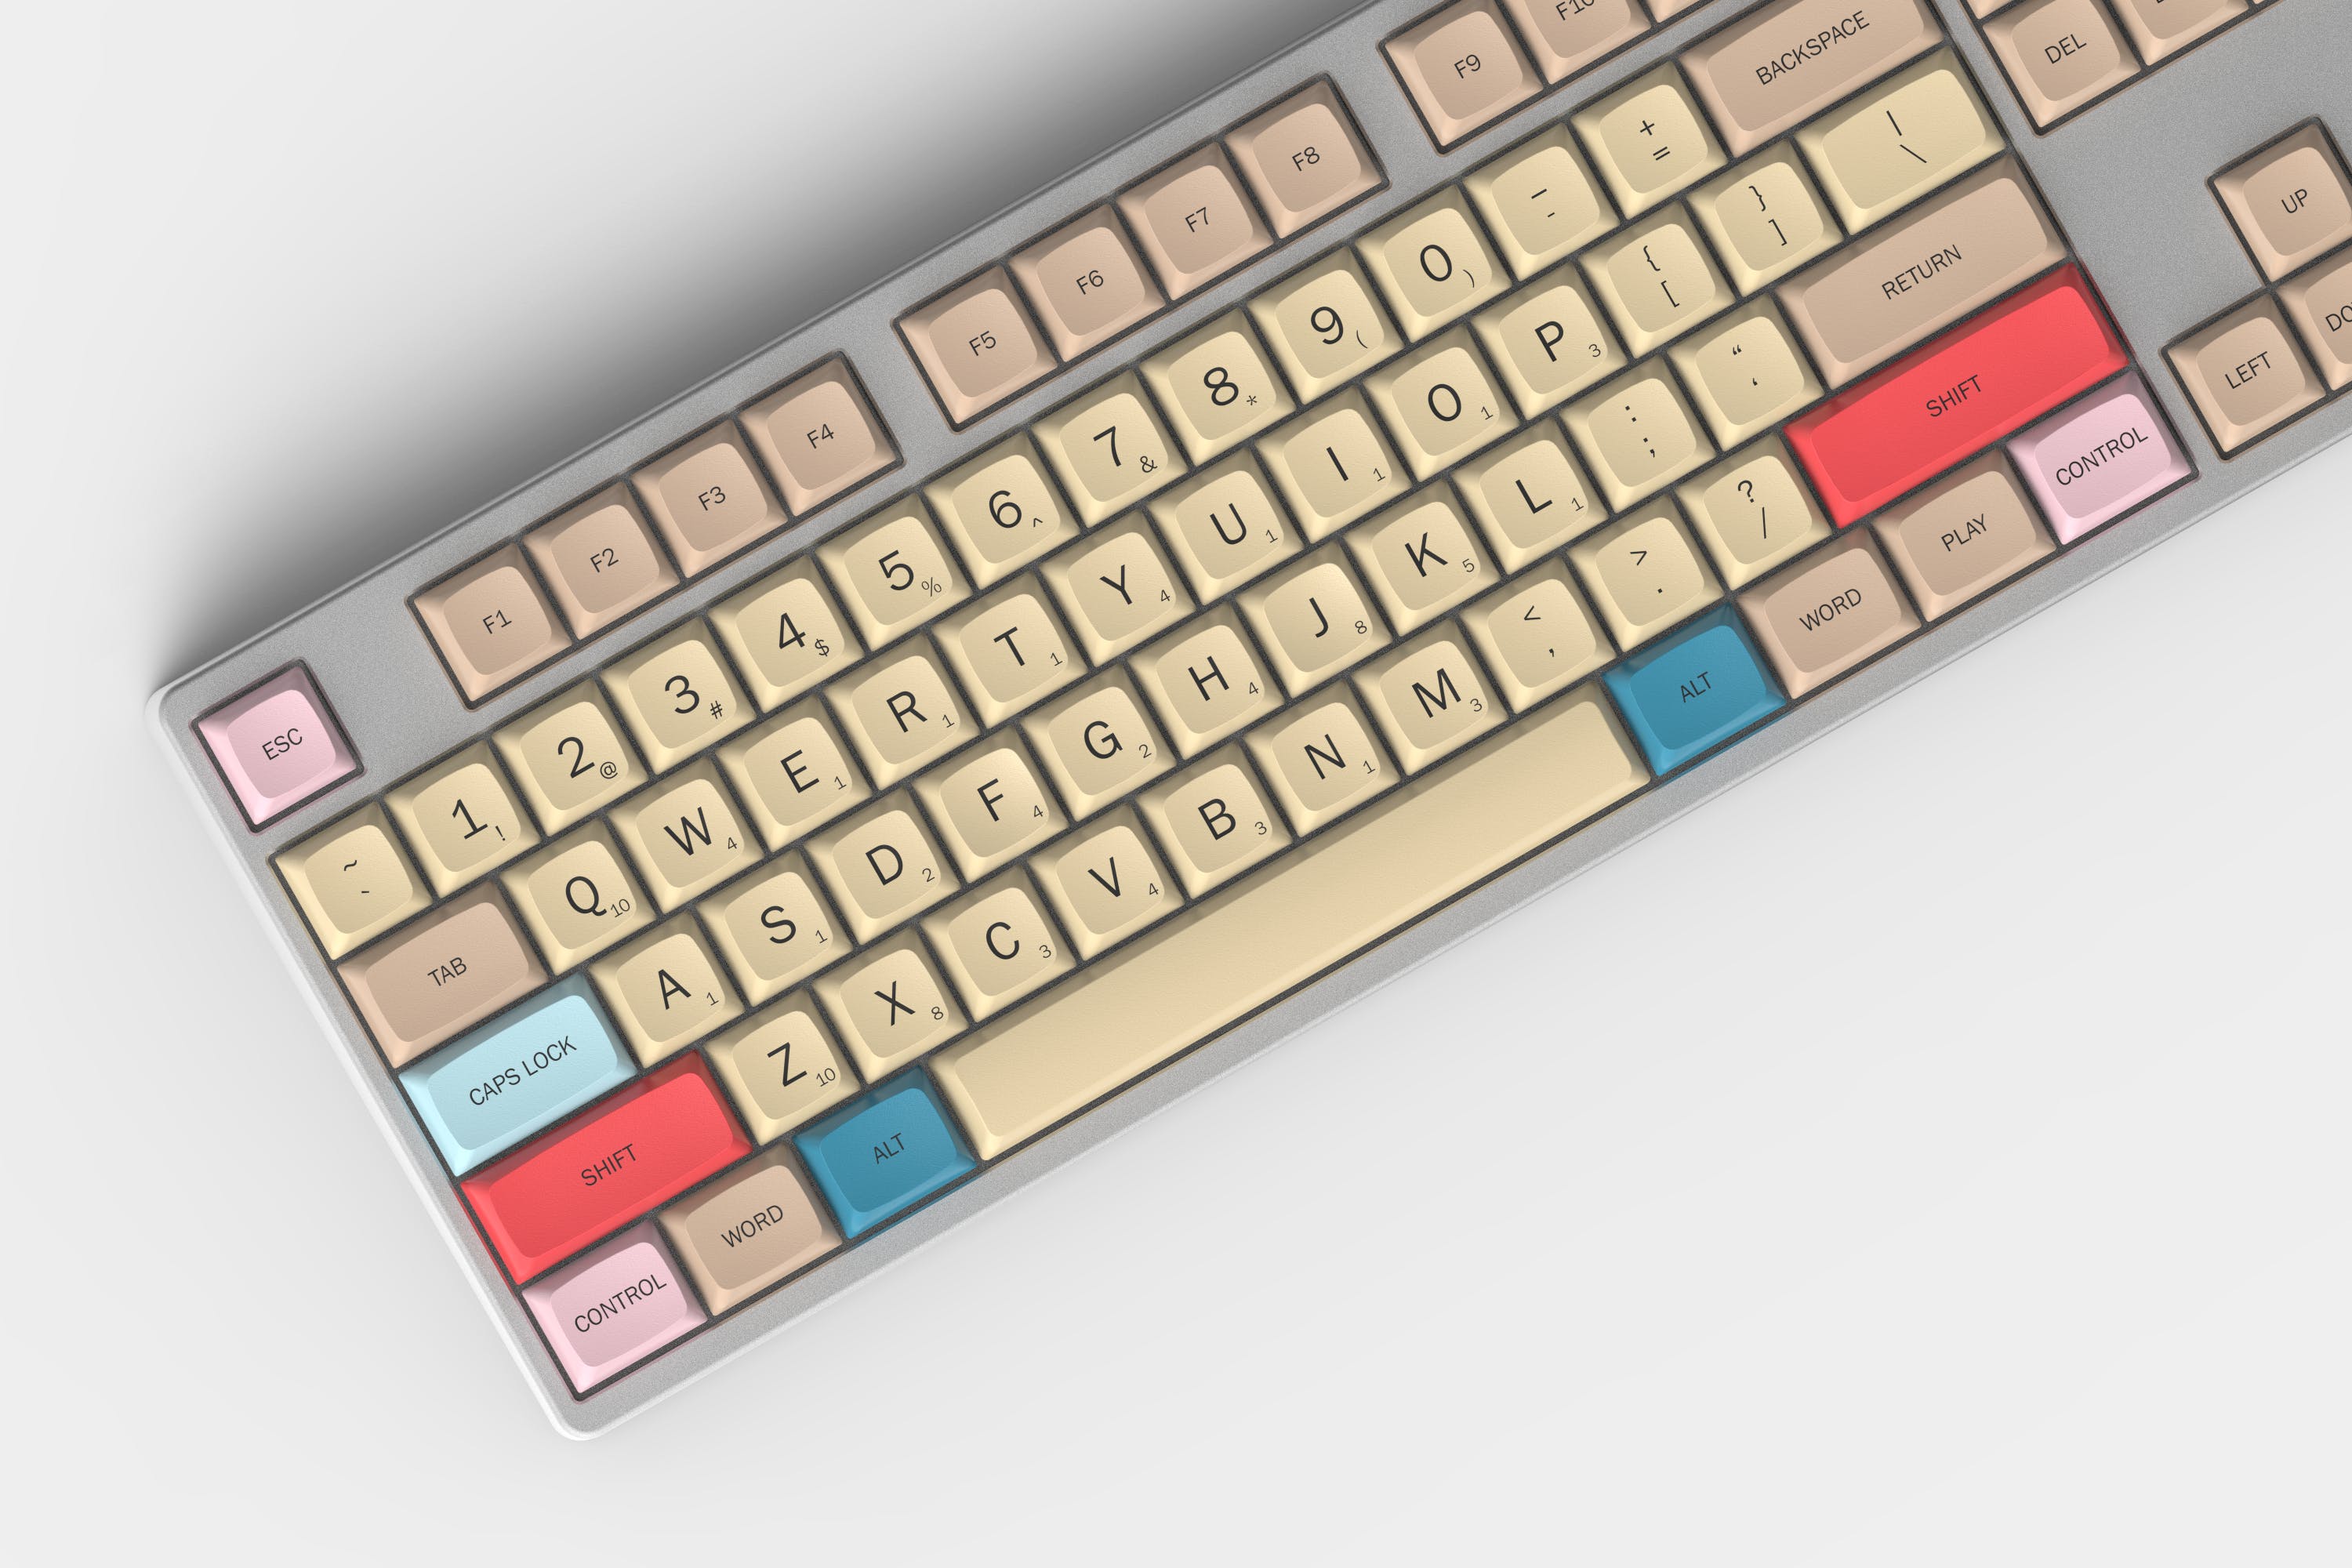 Massdrop x Hasbro Scrabble Keyboard media 1